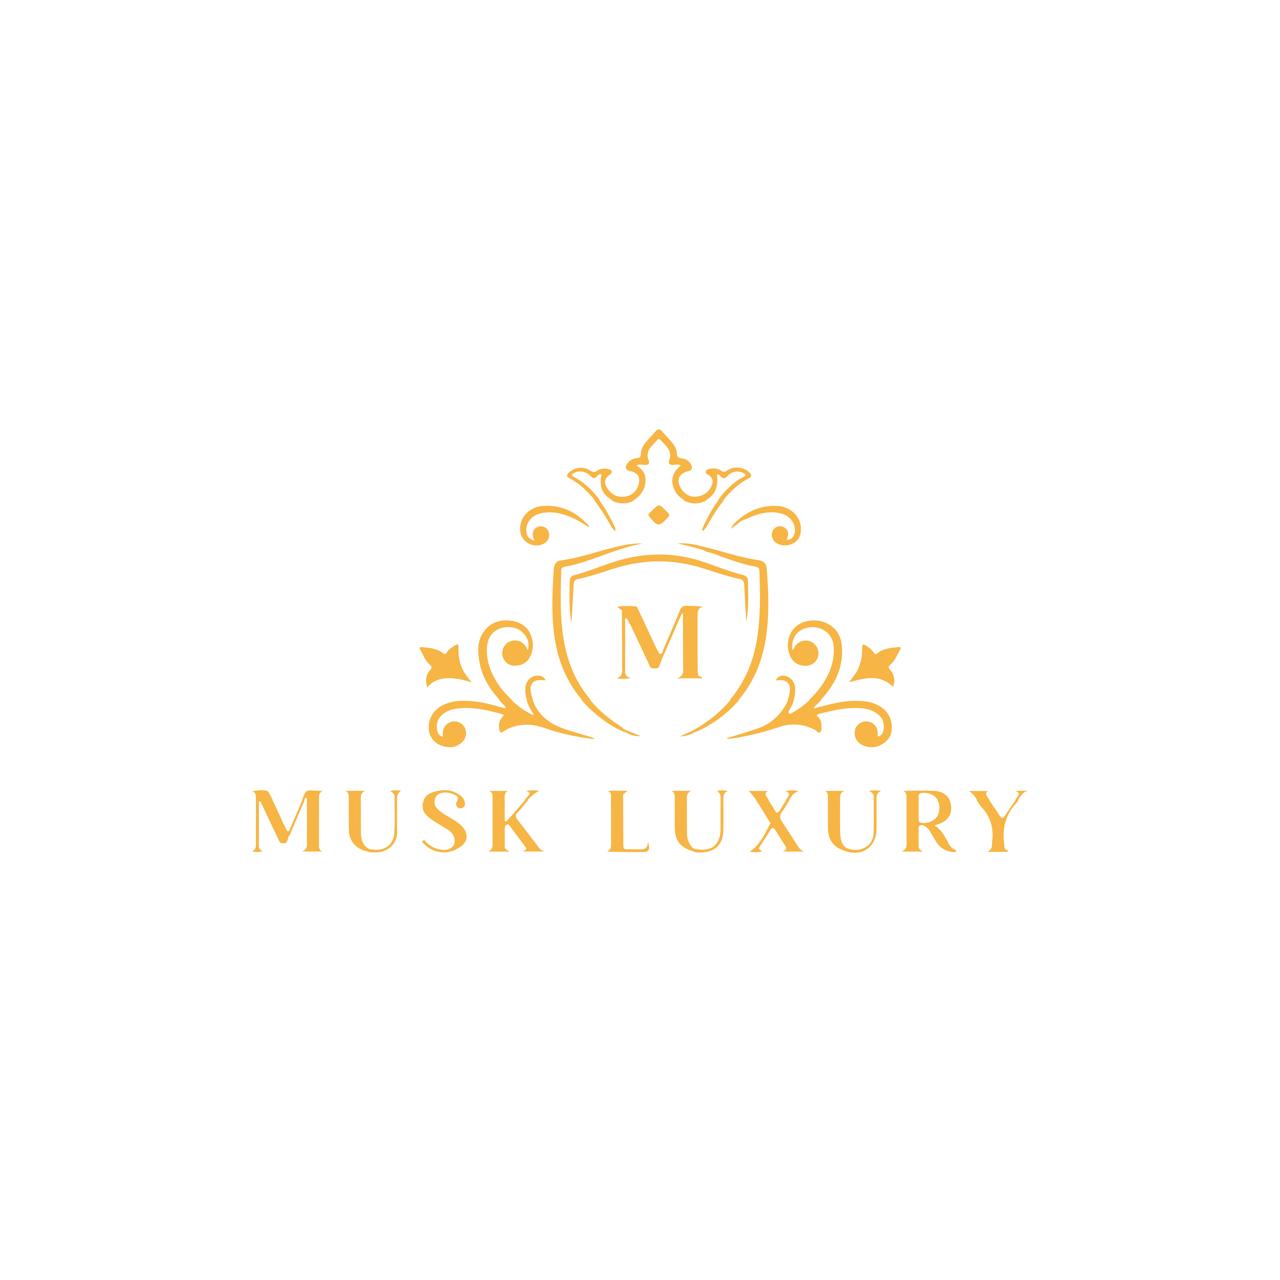 Musk luxury